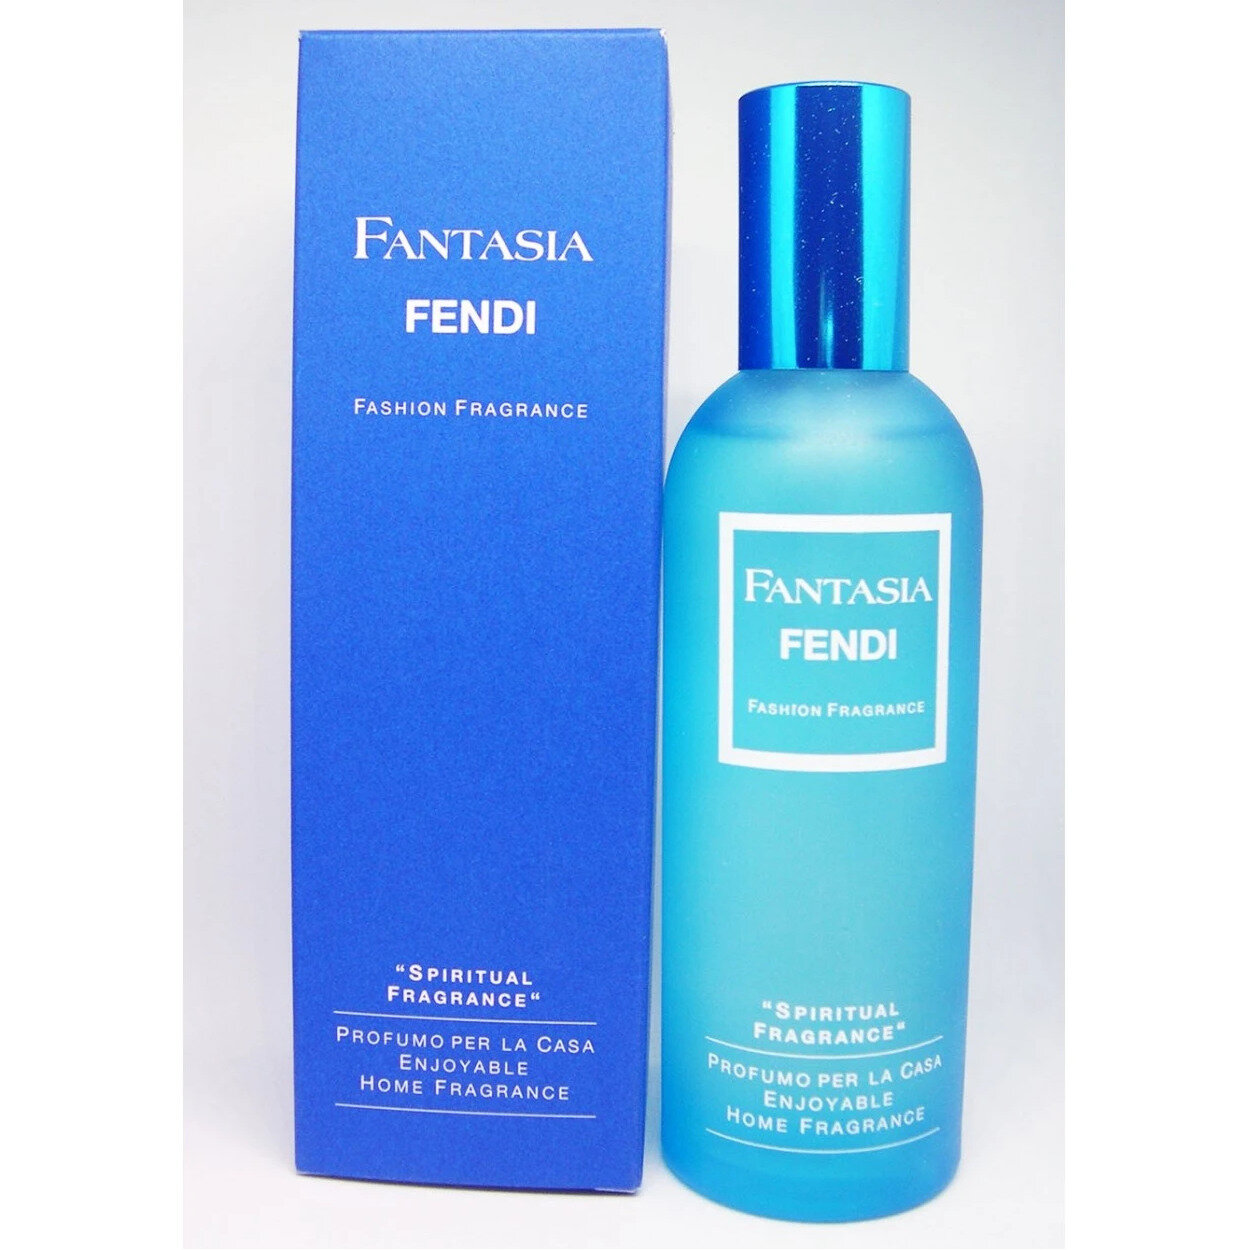 FENDI Fantasia Fendi аромат для дома 125 мл для женщин